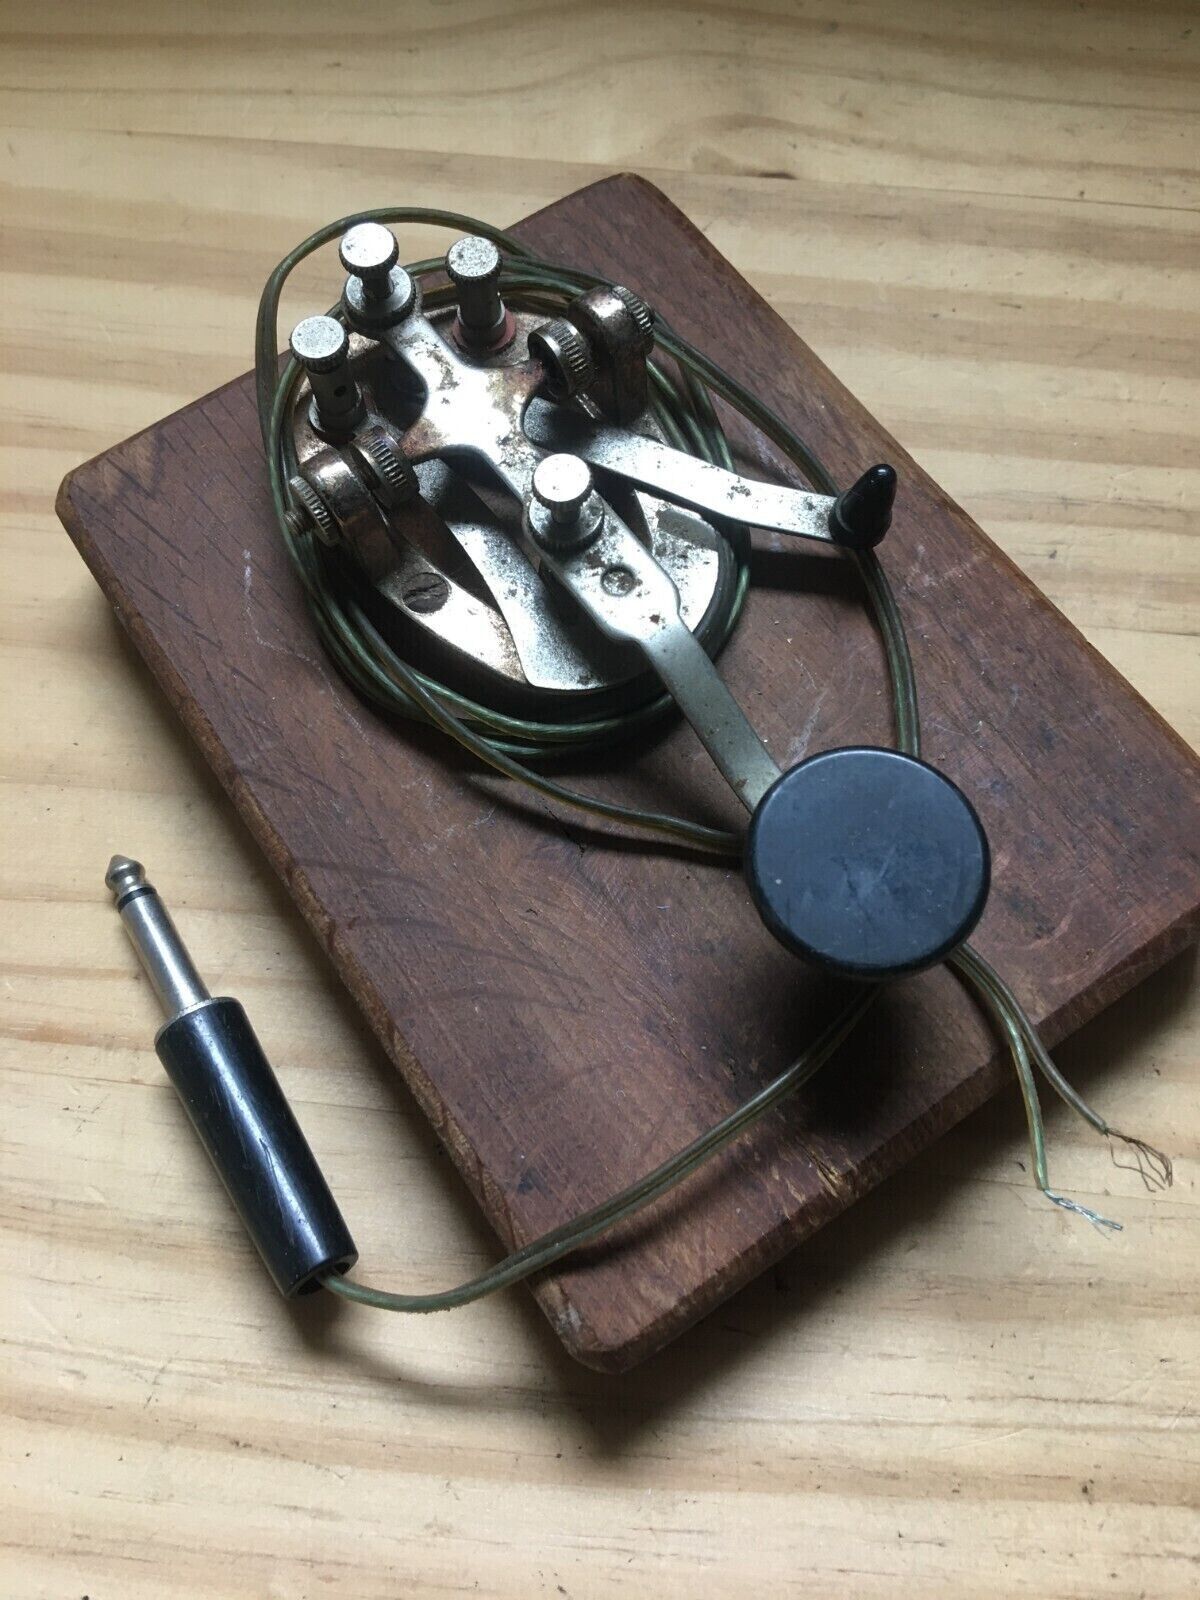 Vintage Morse Code Telegraph Key Keyer w/ cable Steampunk Industrial Decor